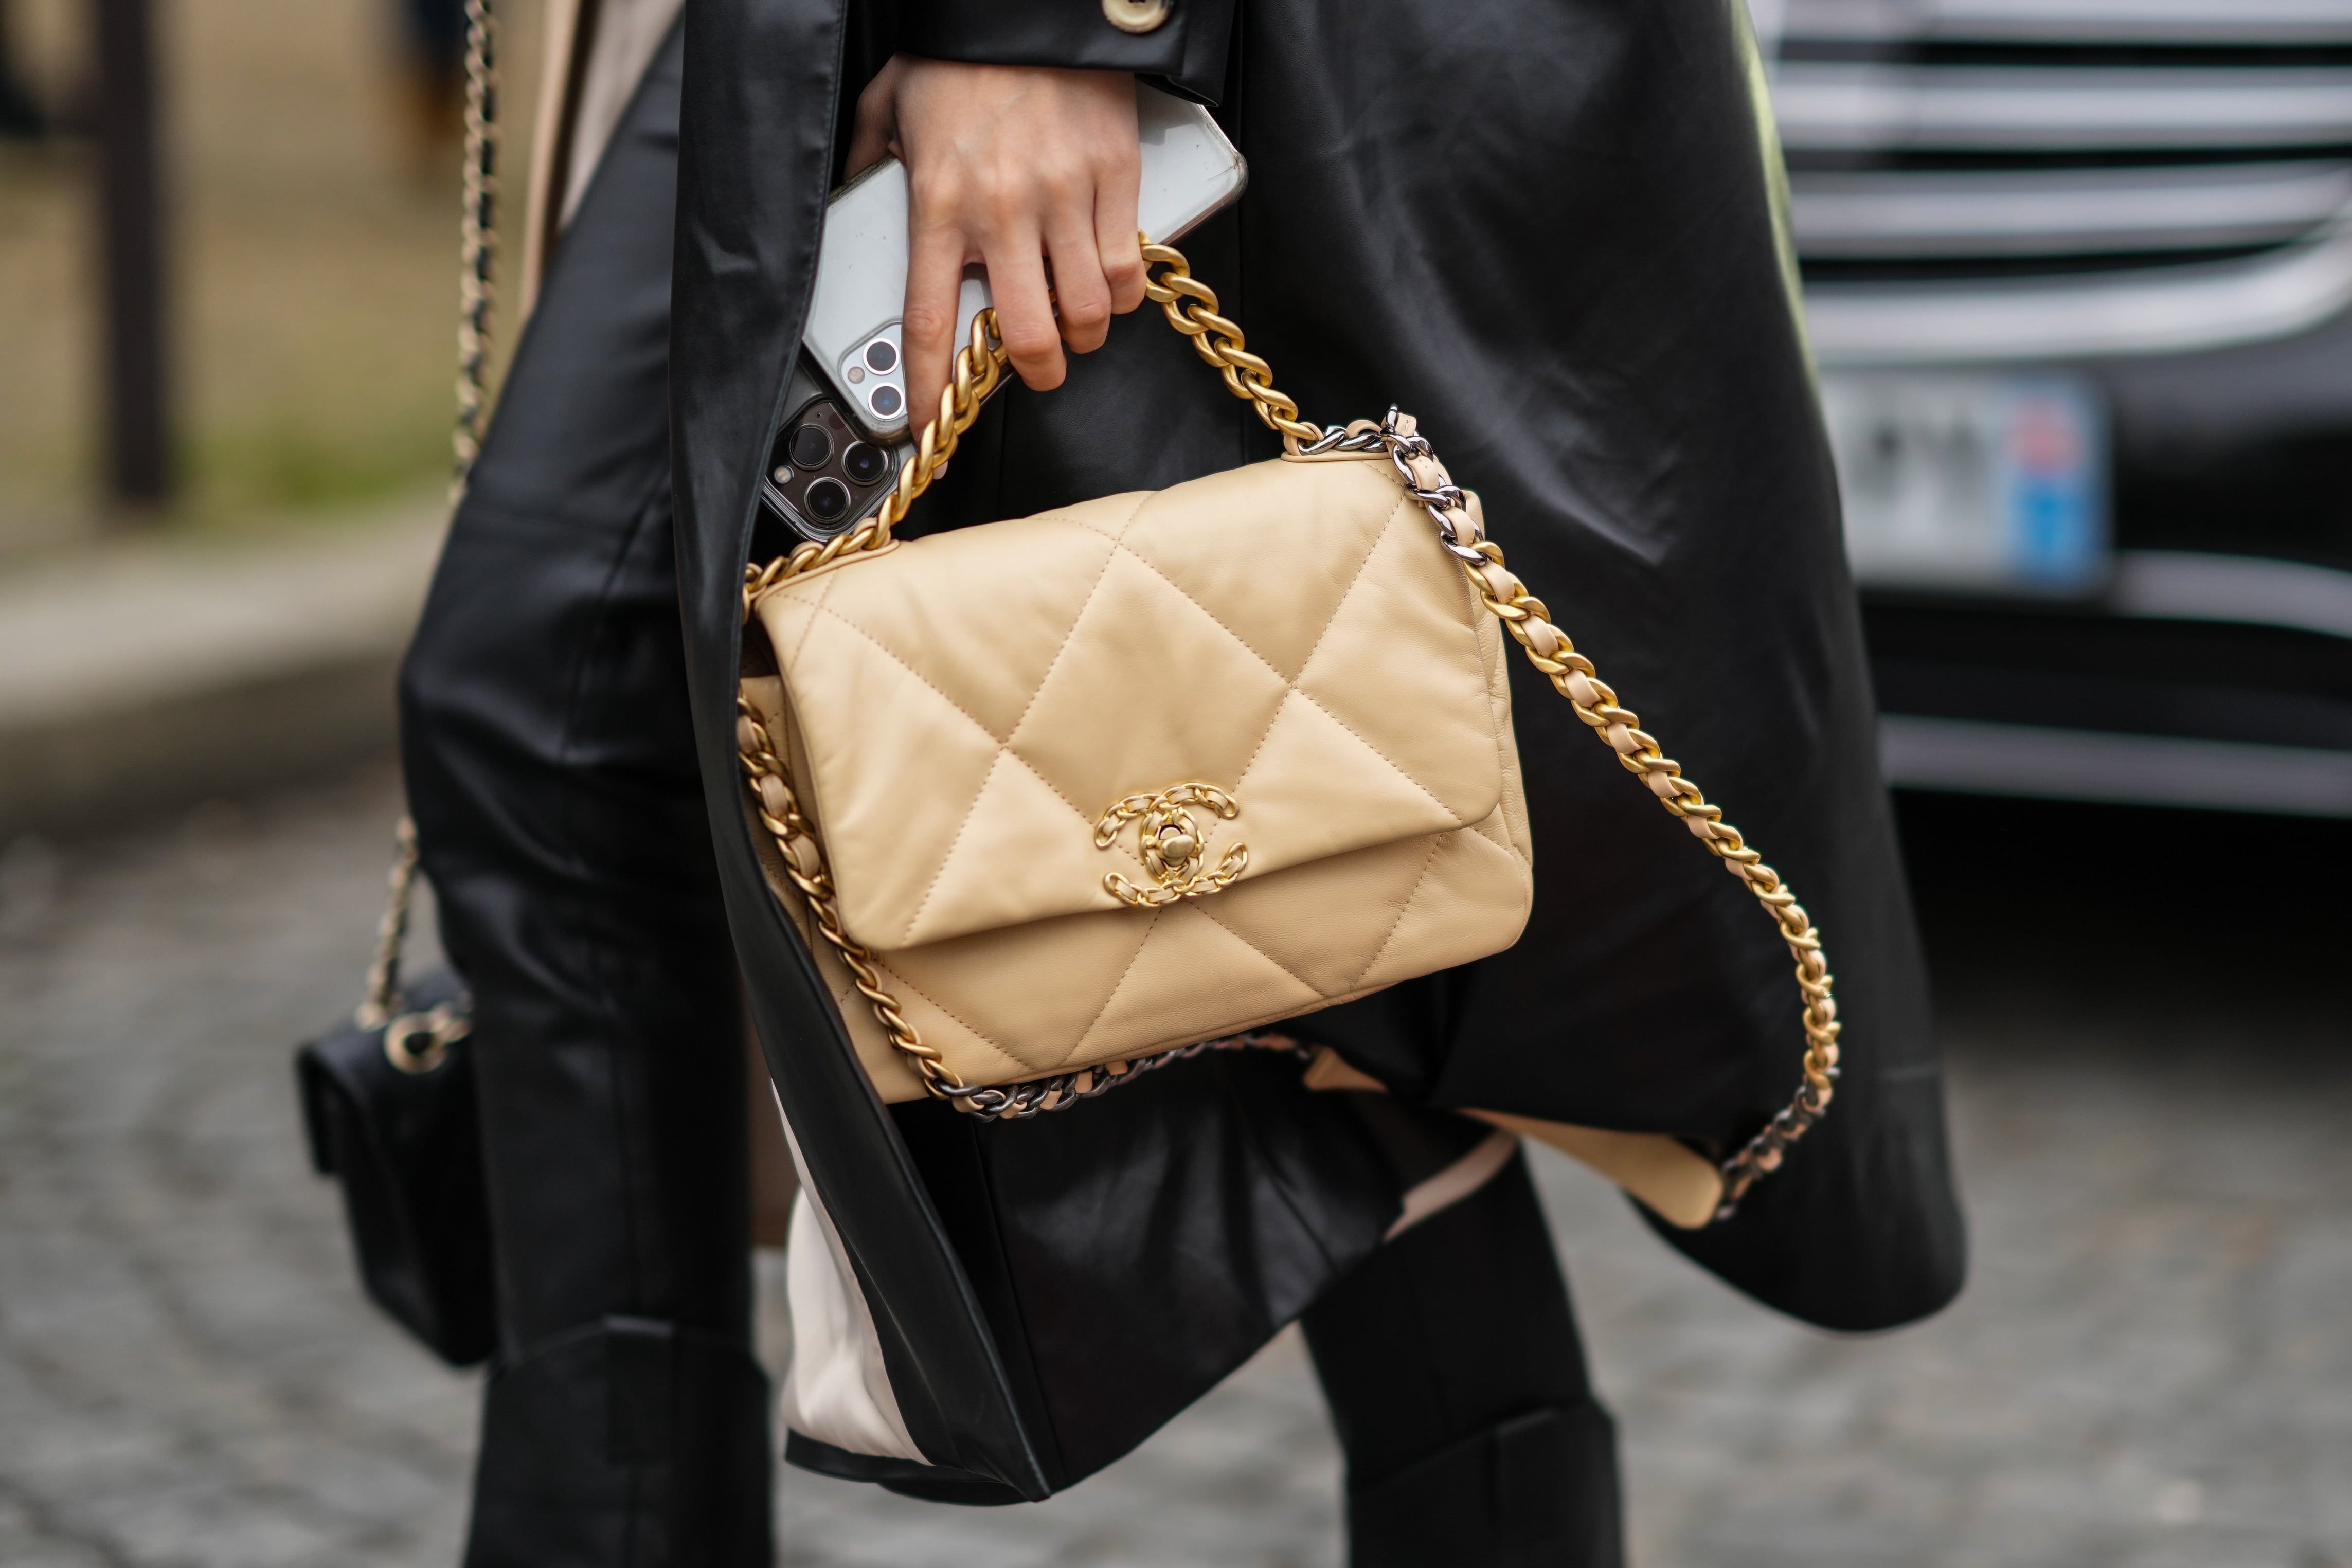 Chanel Handbag Wallet Leather, CHANEL leather bag gold female